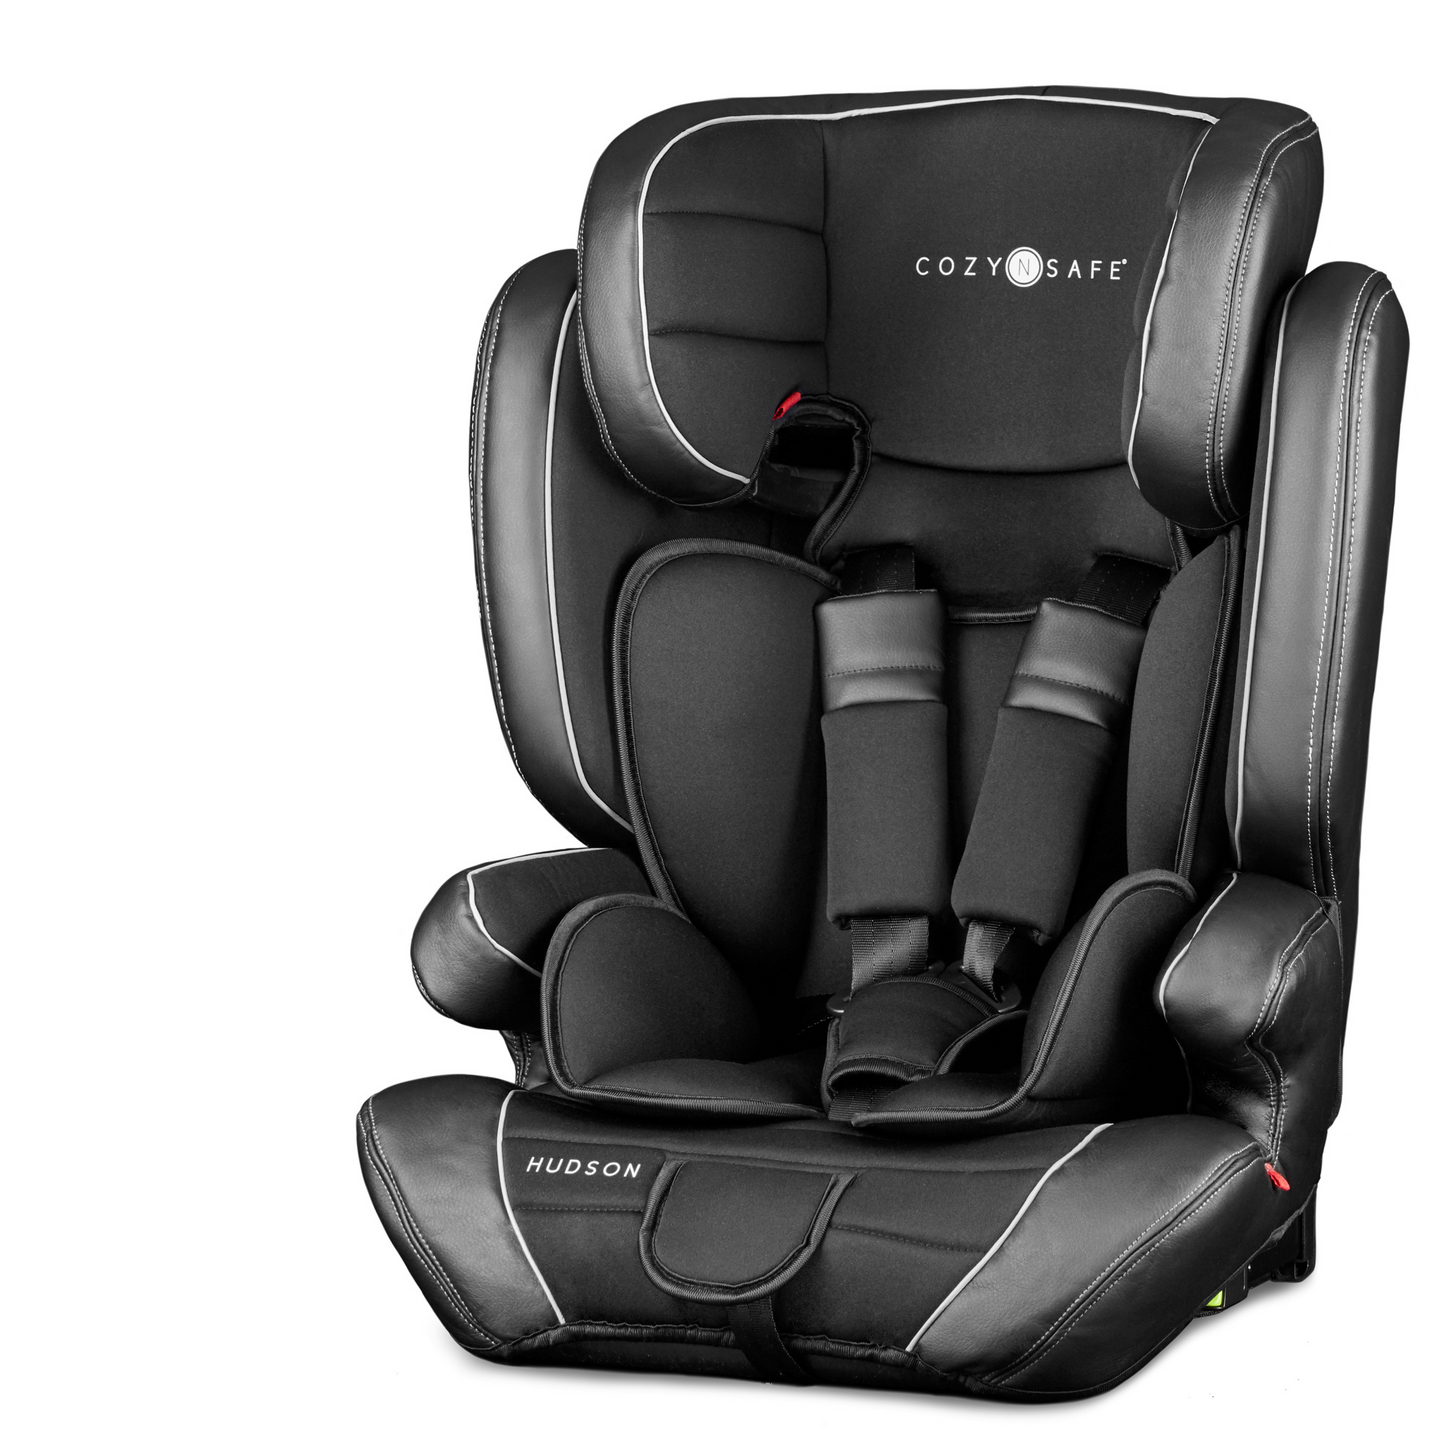 The Cozy N Safe Hudson Group 1/2/3 25kg Harness Car Seat